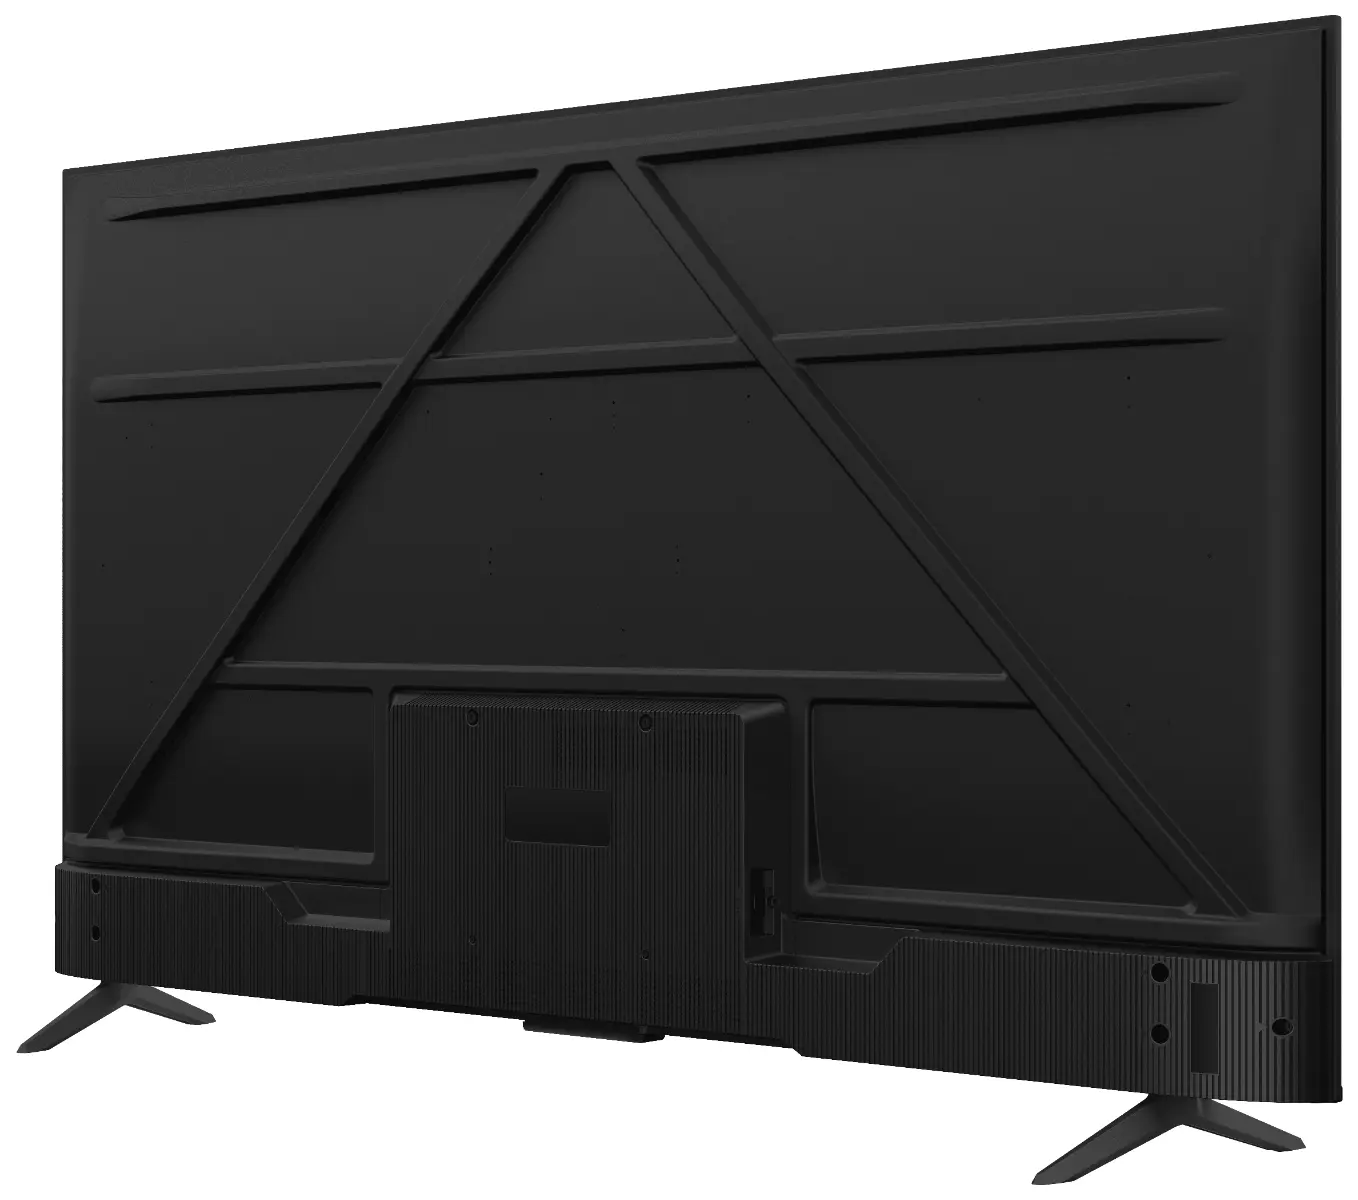 Televizor Smart TCL 65V6B, 163 cm, Ultra HD 4K